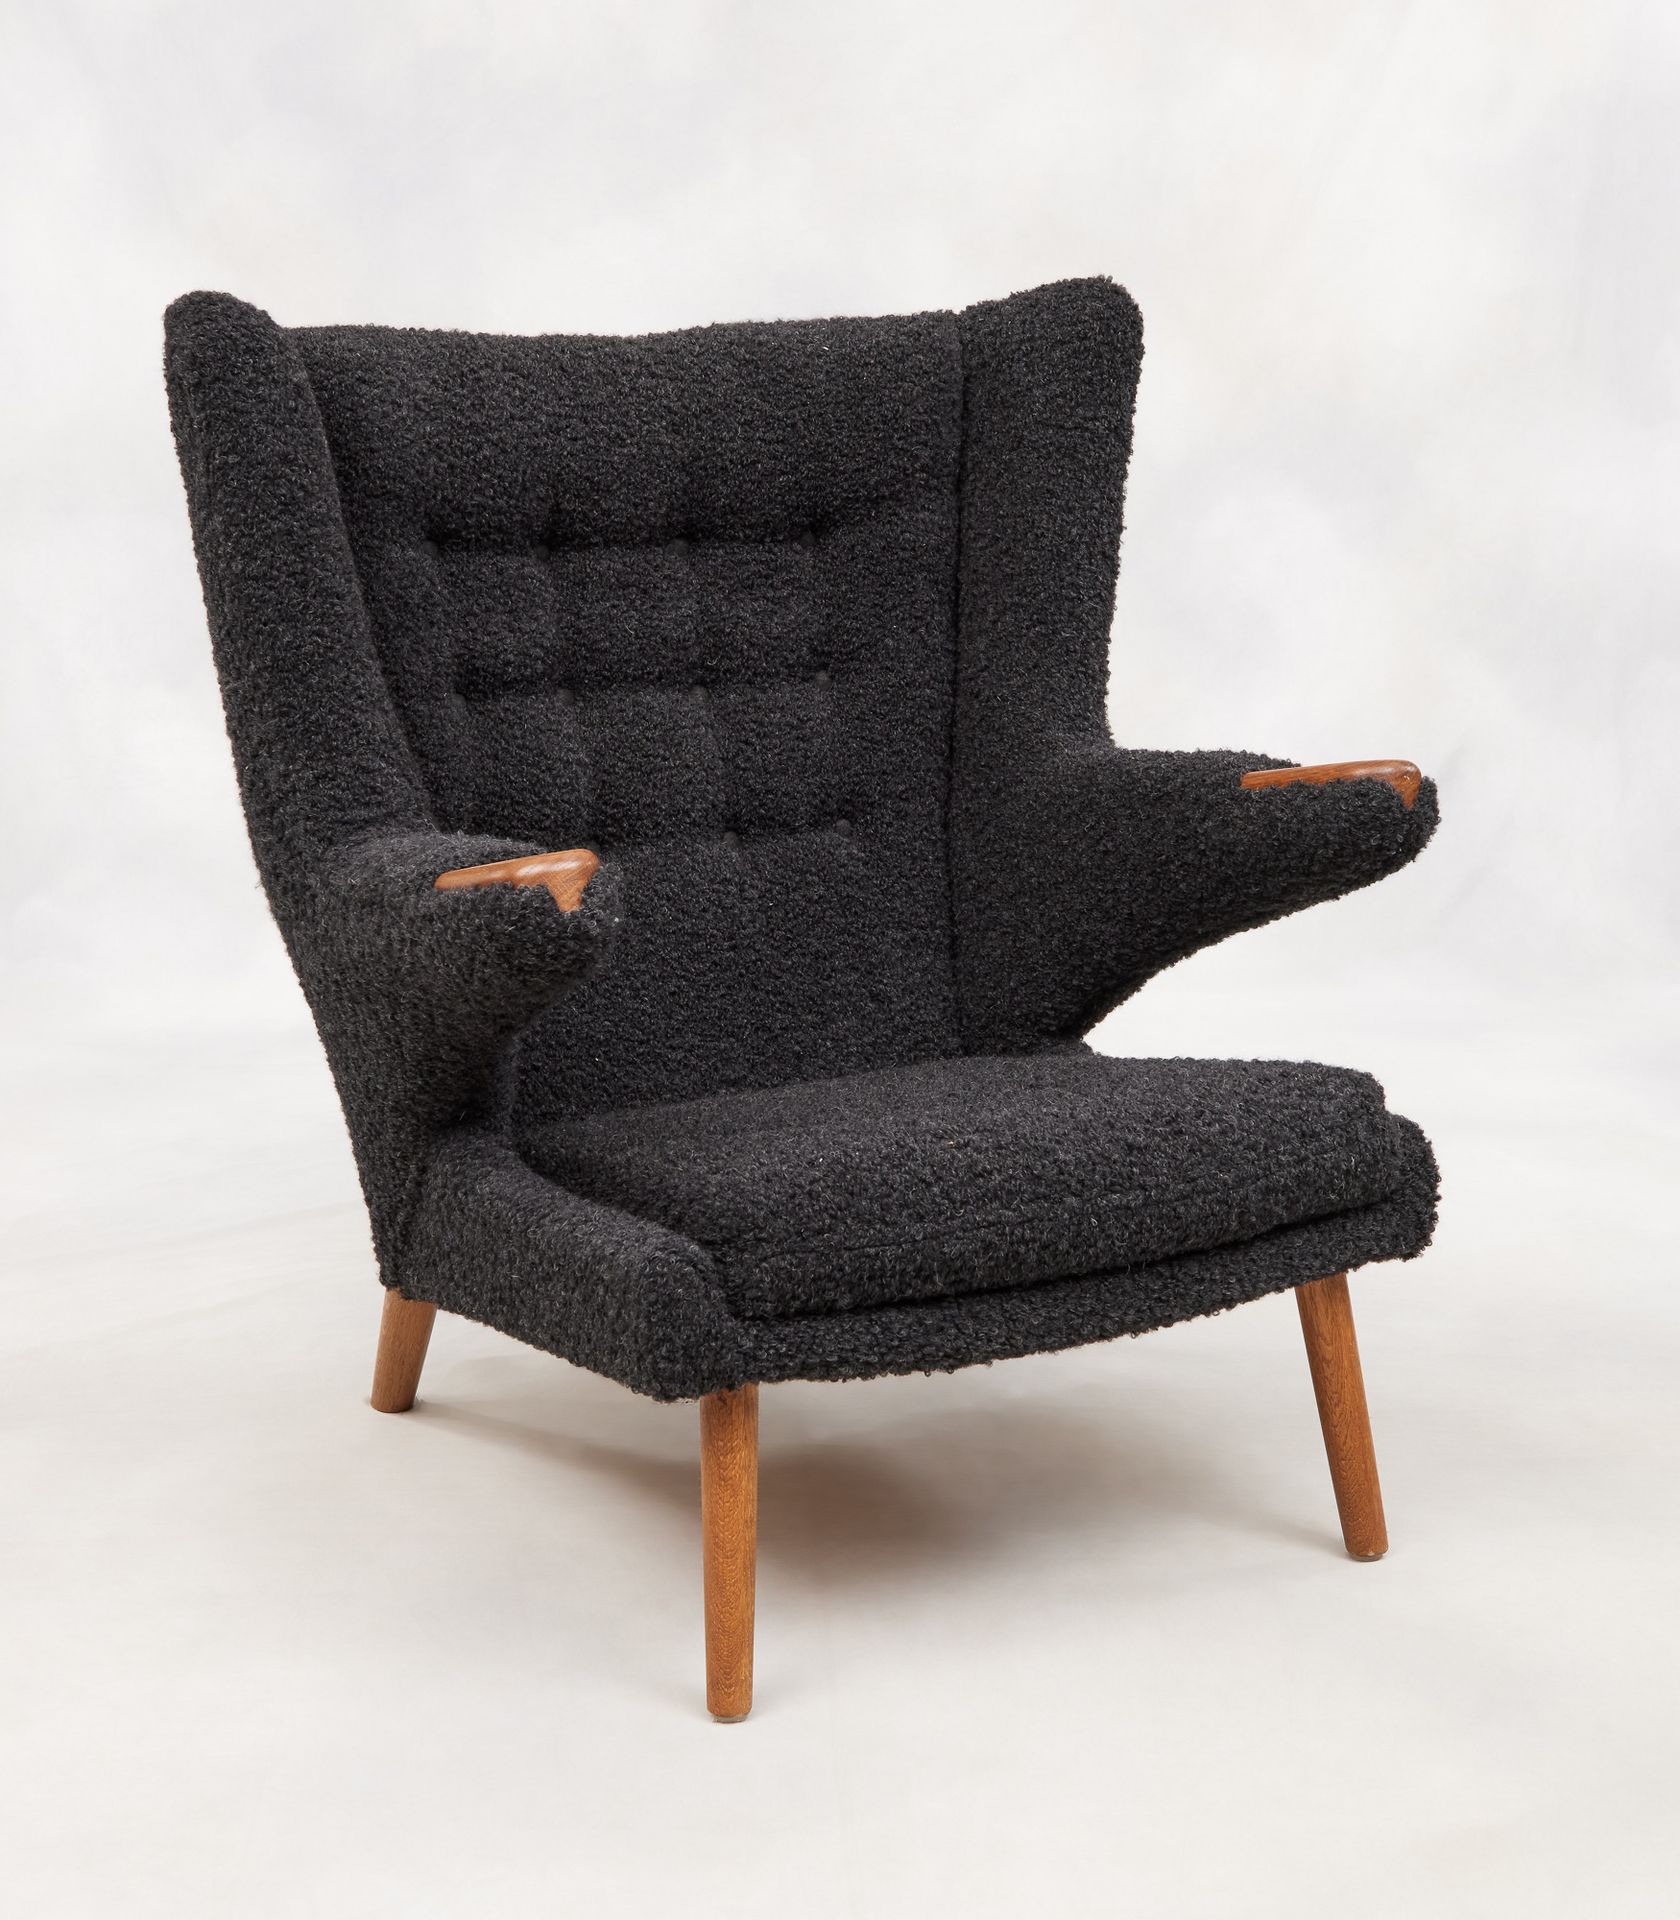 Design danois Hans Wegner. 家具：扶手椅采用环形织物装饰，柚木椅腿和扶手，型号为 "熊爸爸"。

在作品下标注 "丹麦家具制造商"。